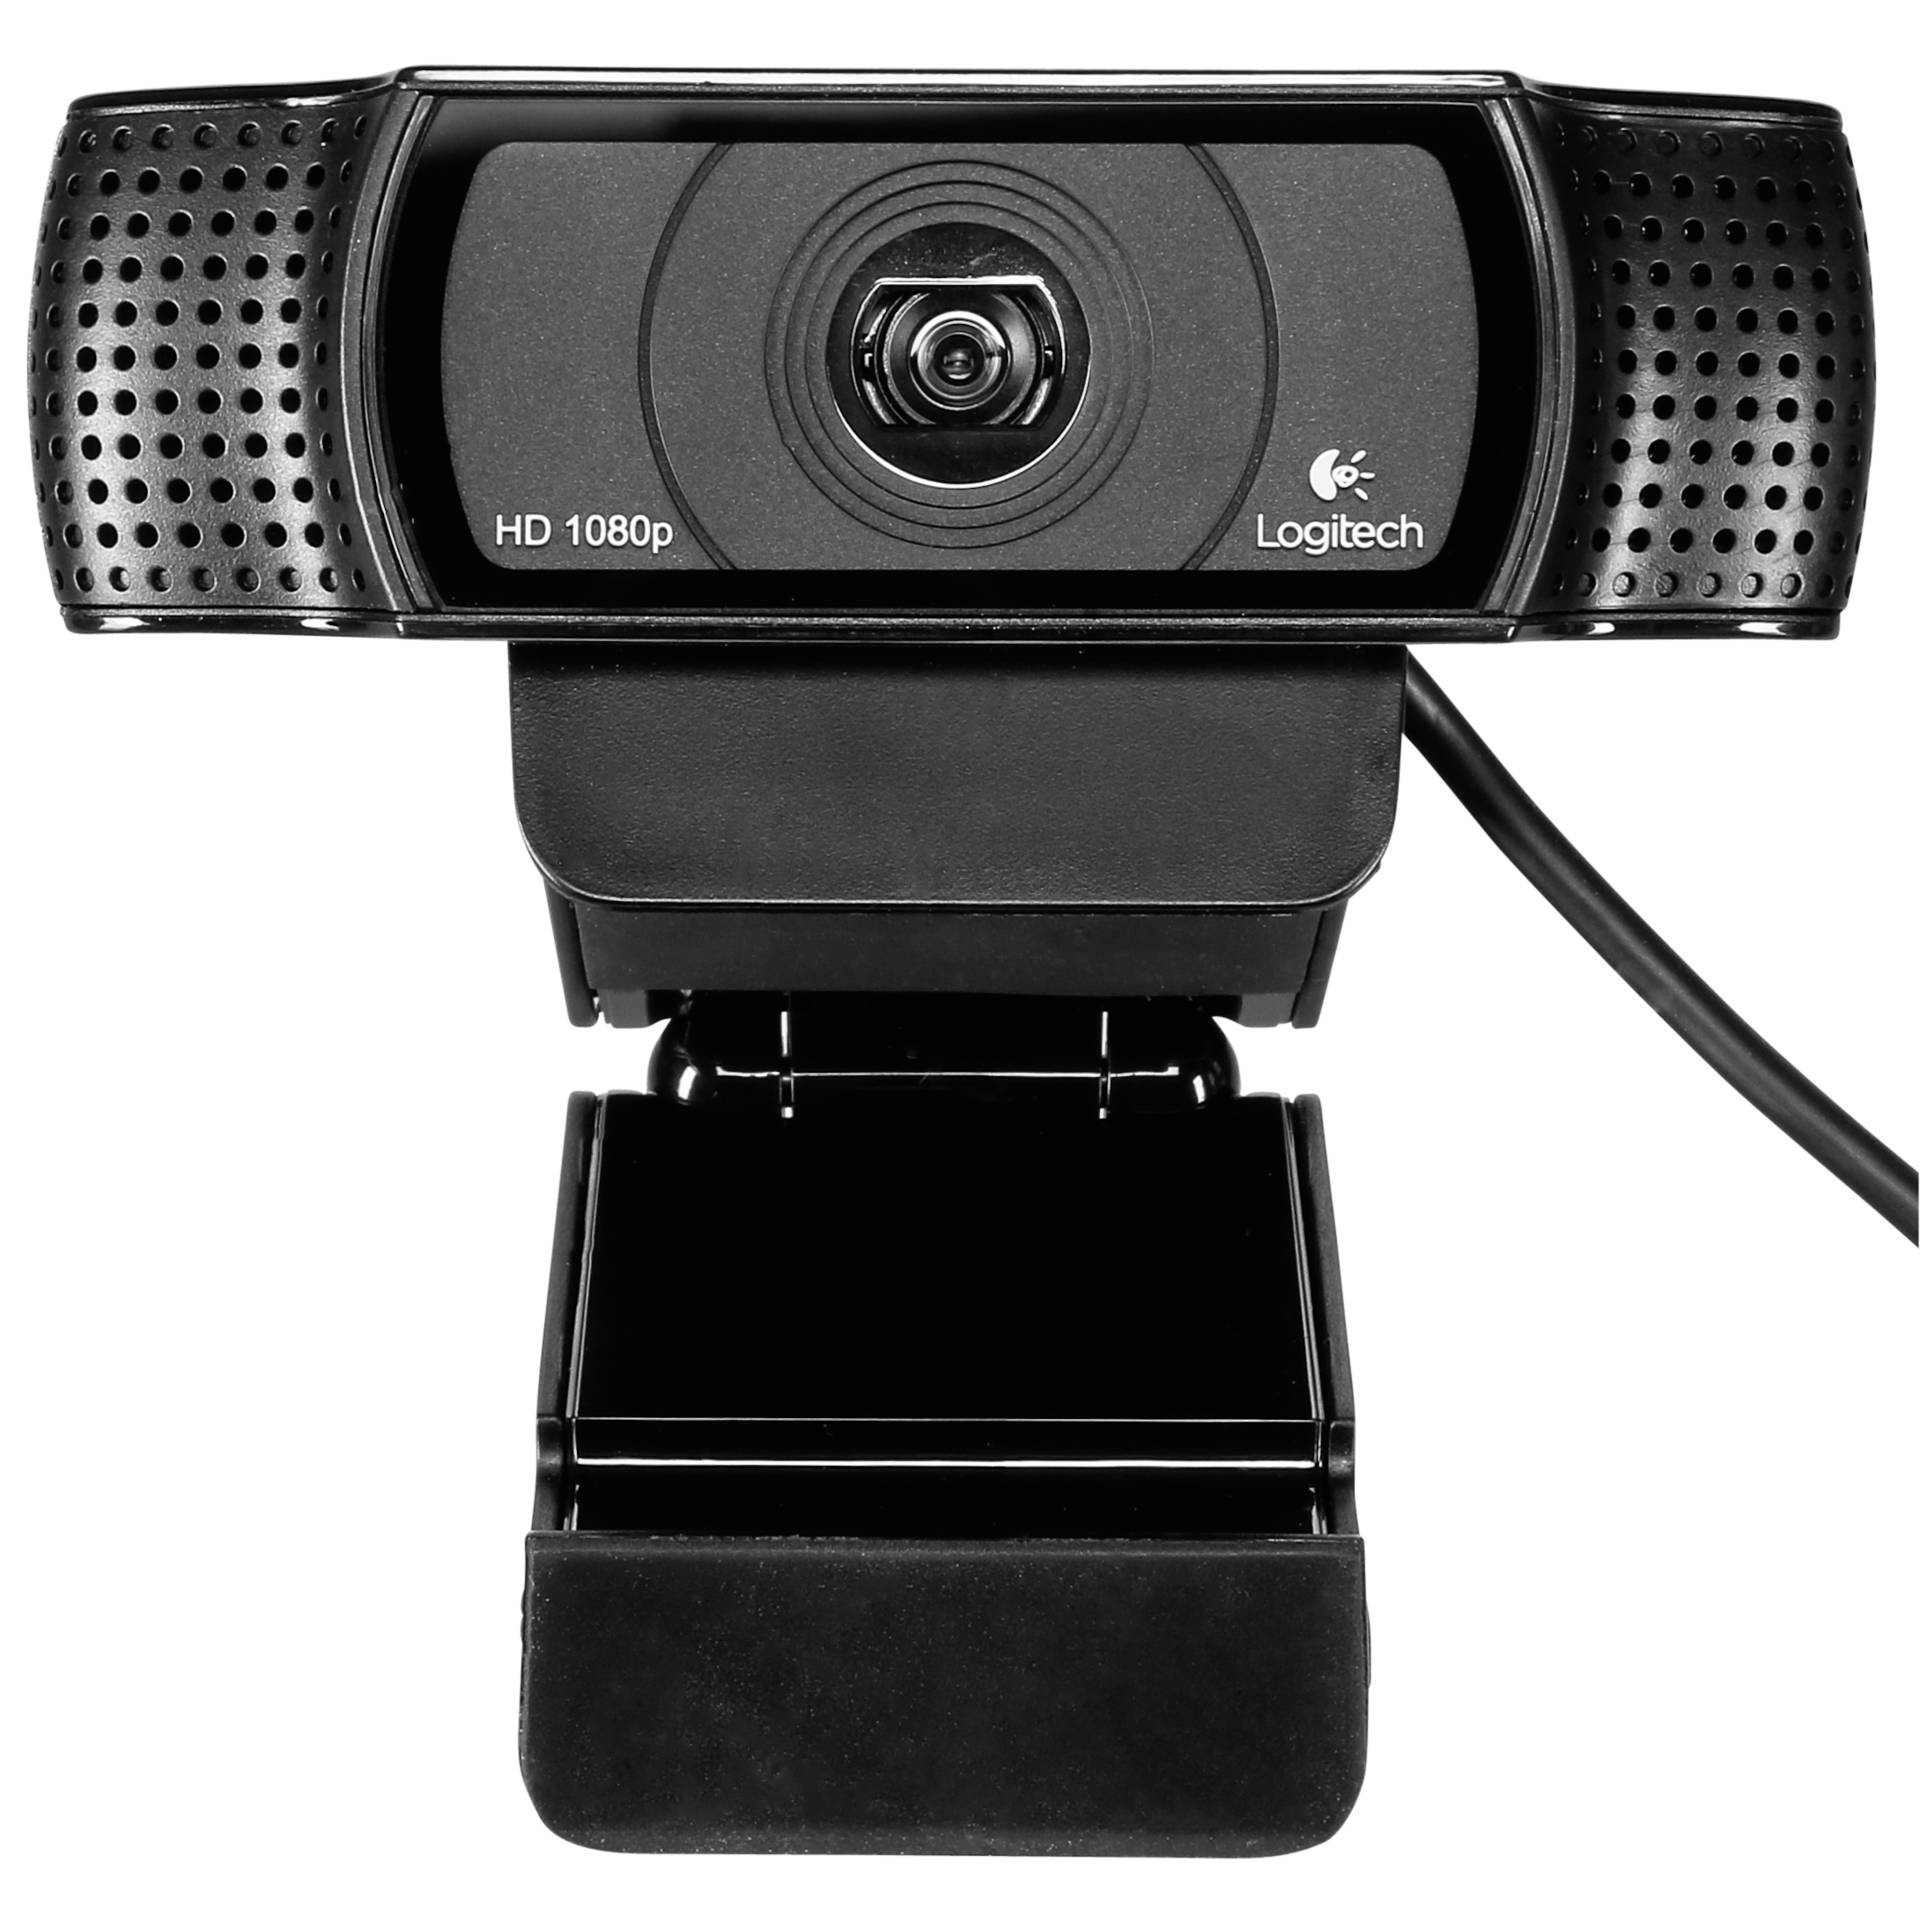 Logitech HD Pro Webcam C920, USB 2.0 